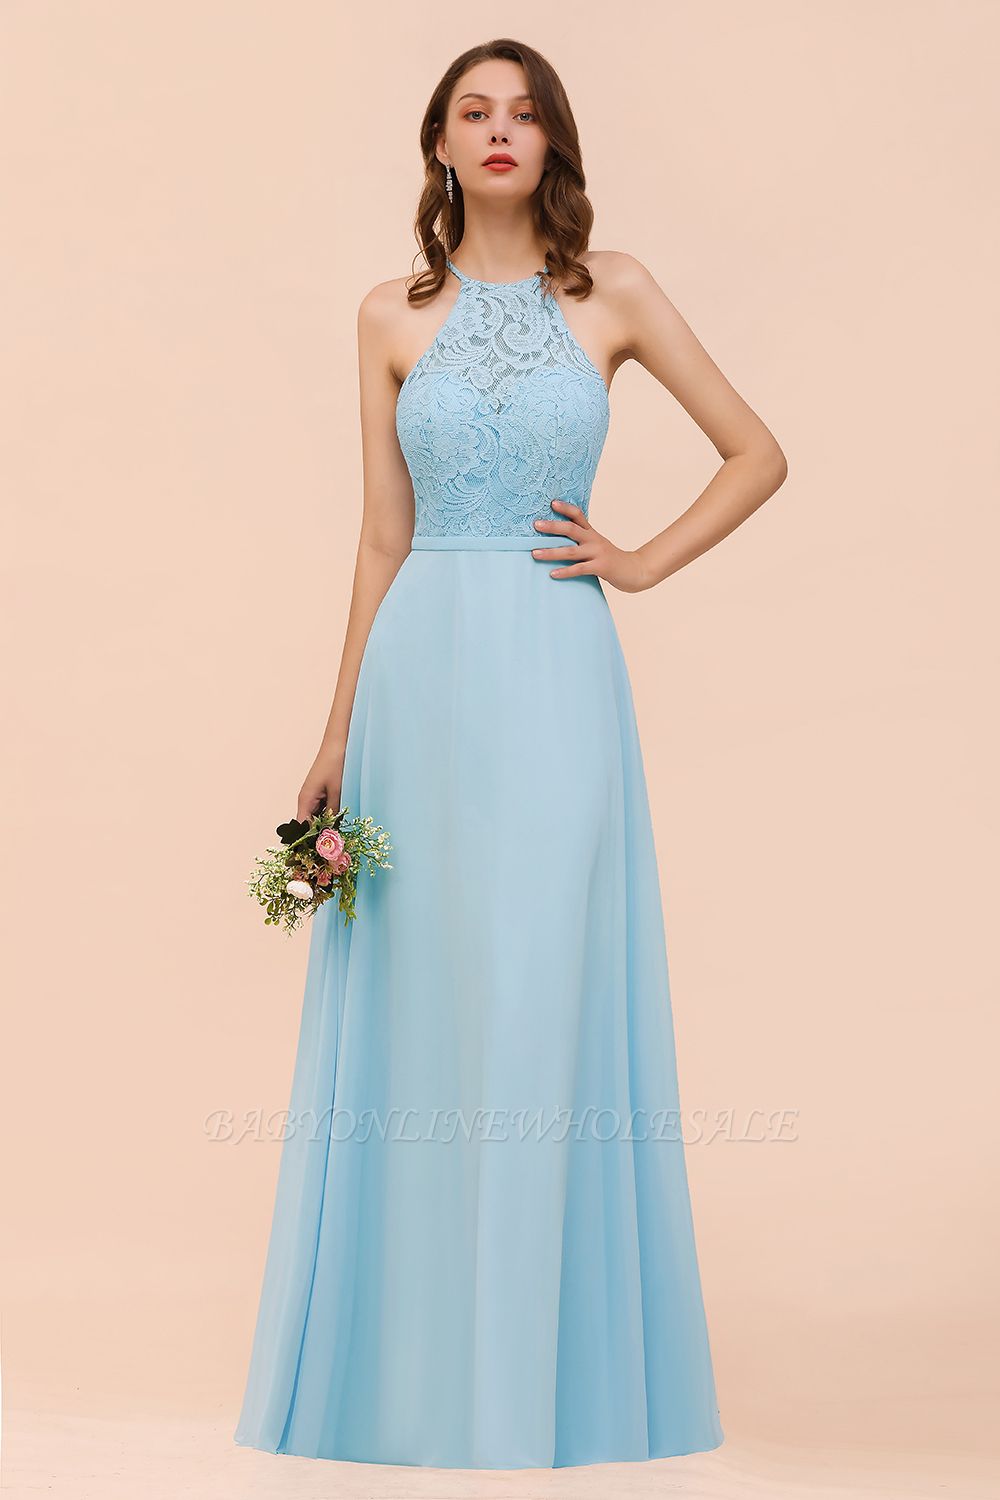 Sky Blue Halter Hollow Lace Wedding Guest Dress Sleeveless Party Wear Dress